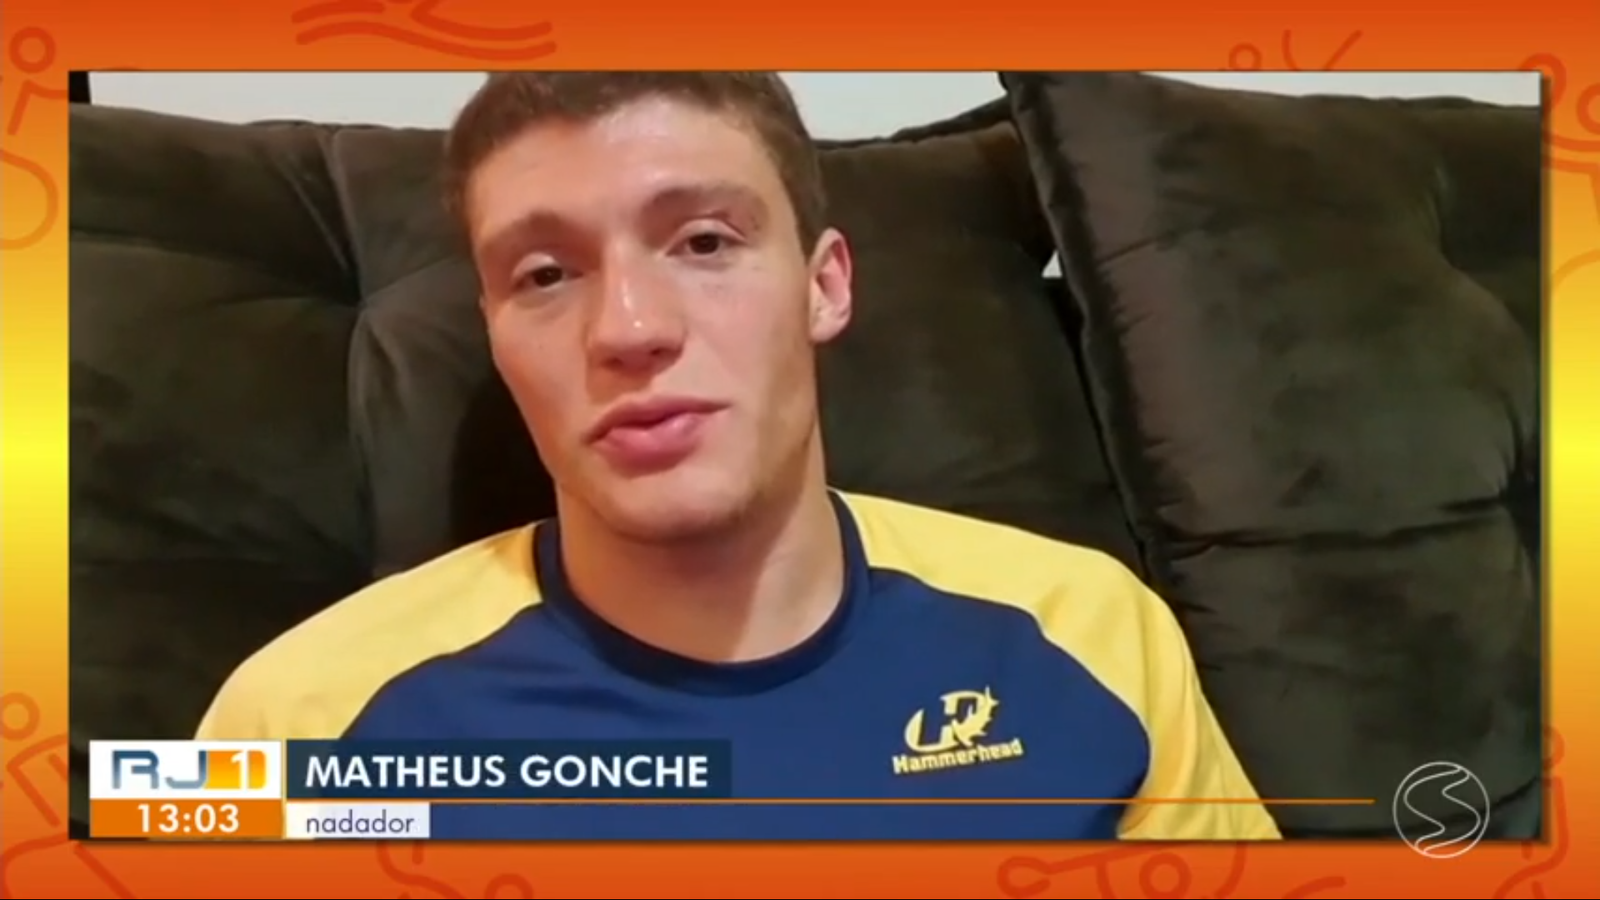 Matheus Gonche - RJ1 Tv Rio Sul